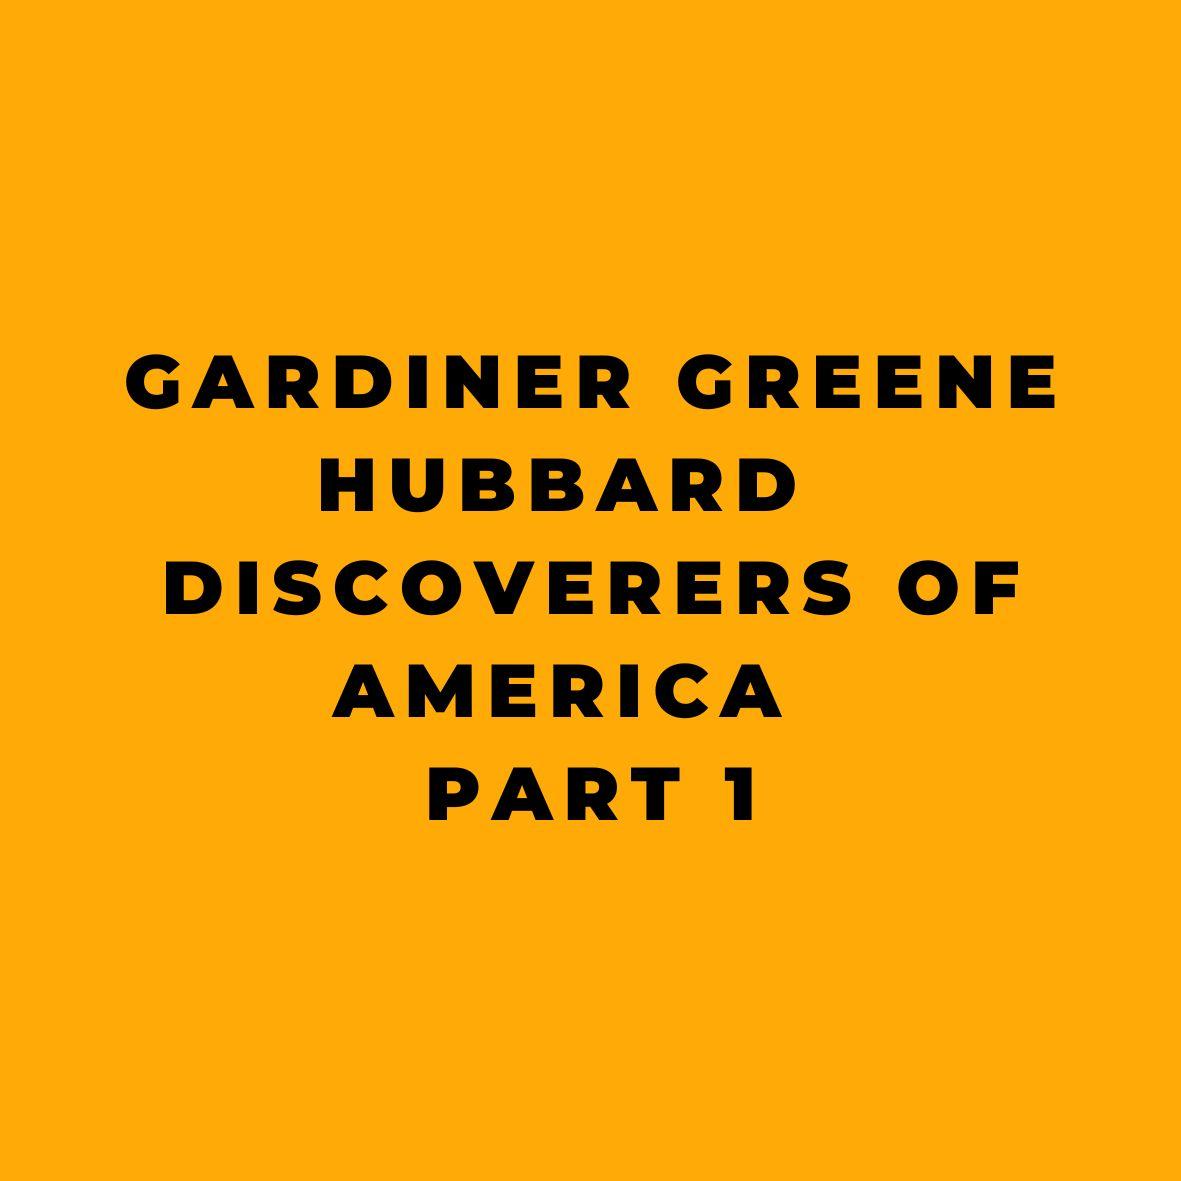 Gardiner Greene Hubbard Discoverers of America Part 1